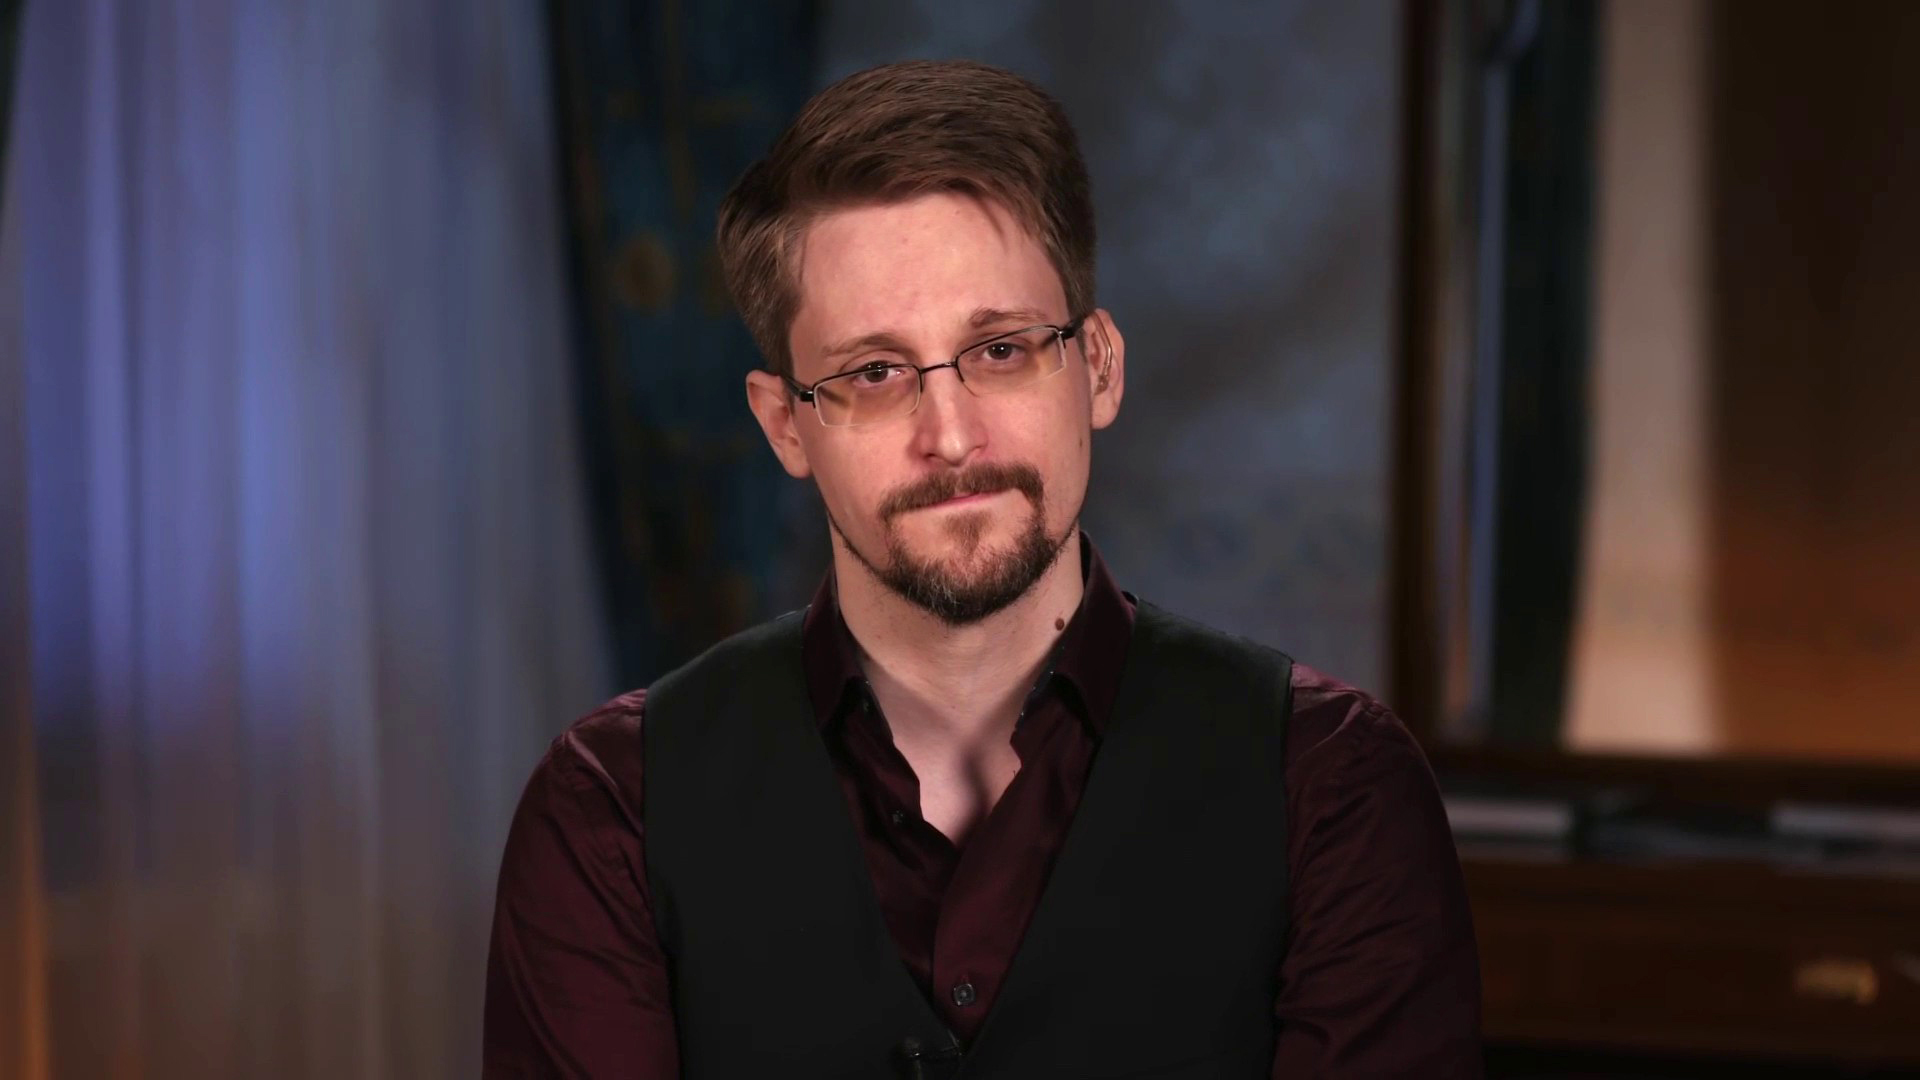 Edward Snowden during an interview